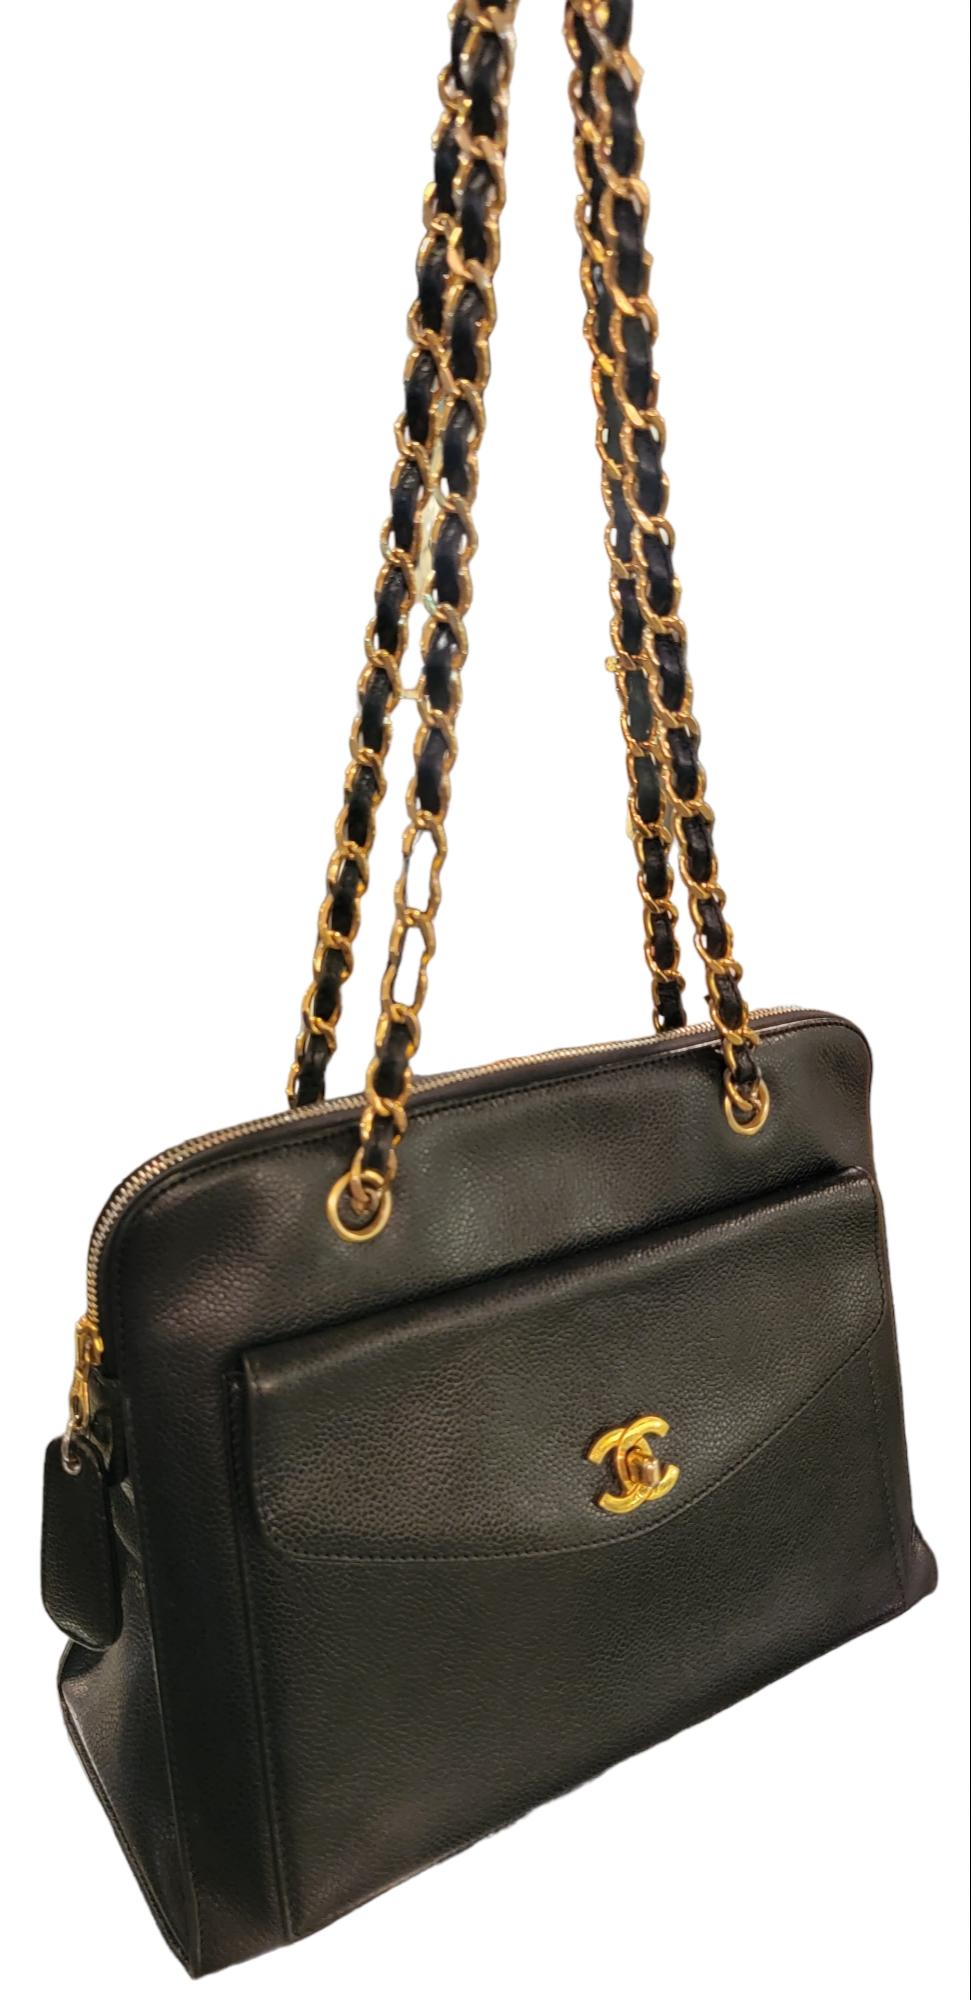 CHANEL Black Vintage Caviar Skin Leather Shoulder Bag In Good Condition For Sale In Pasadena, CA